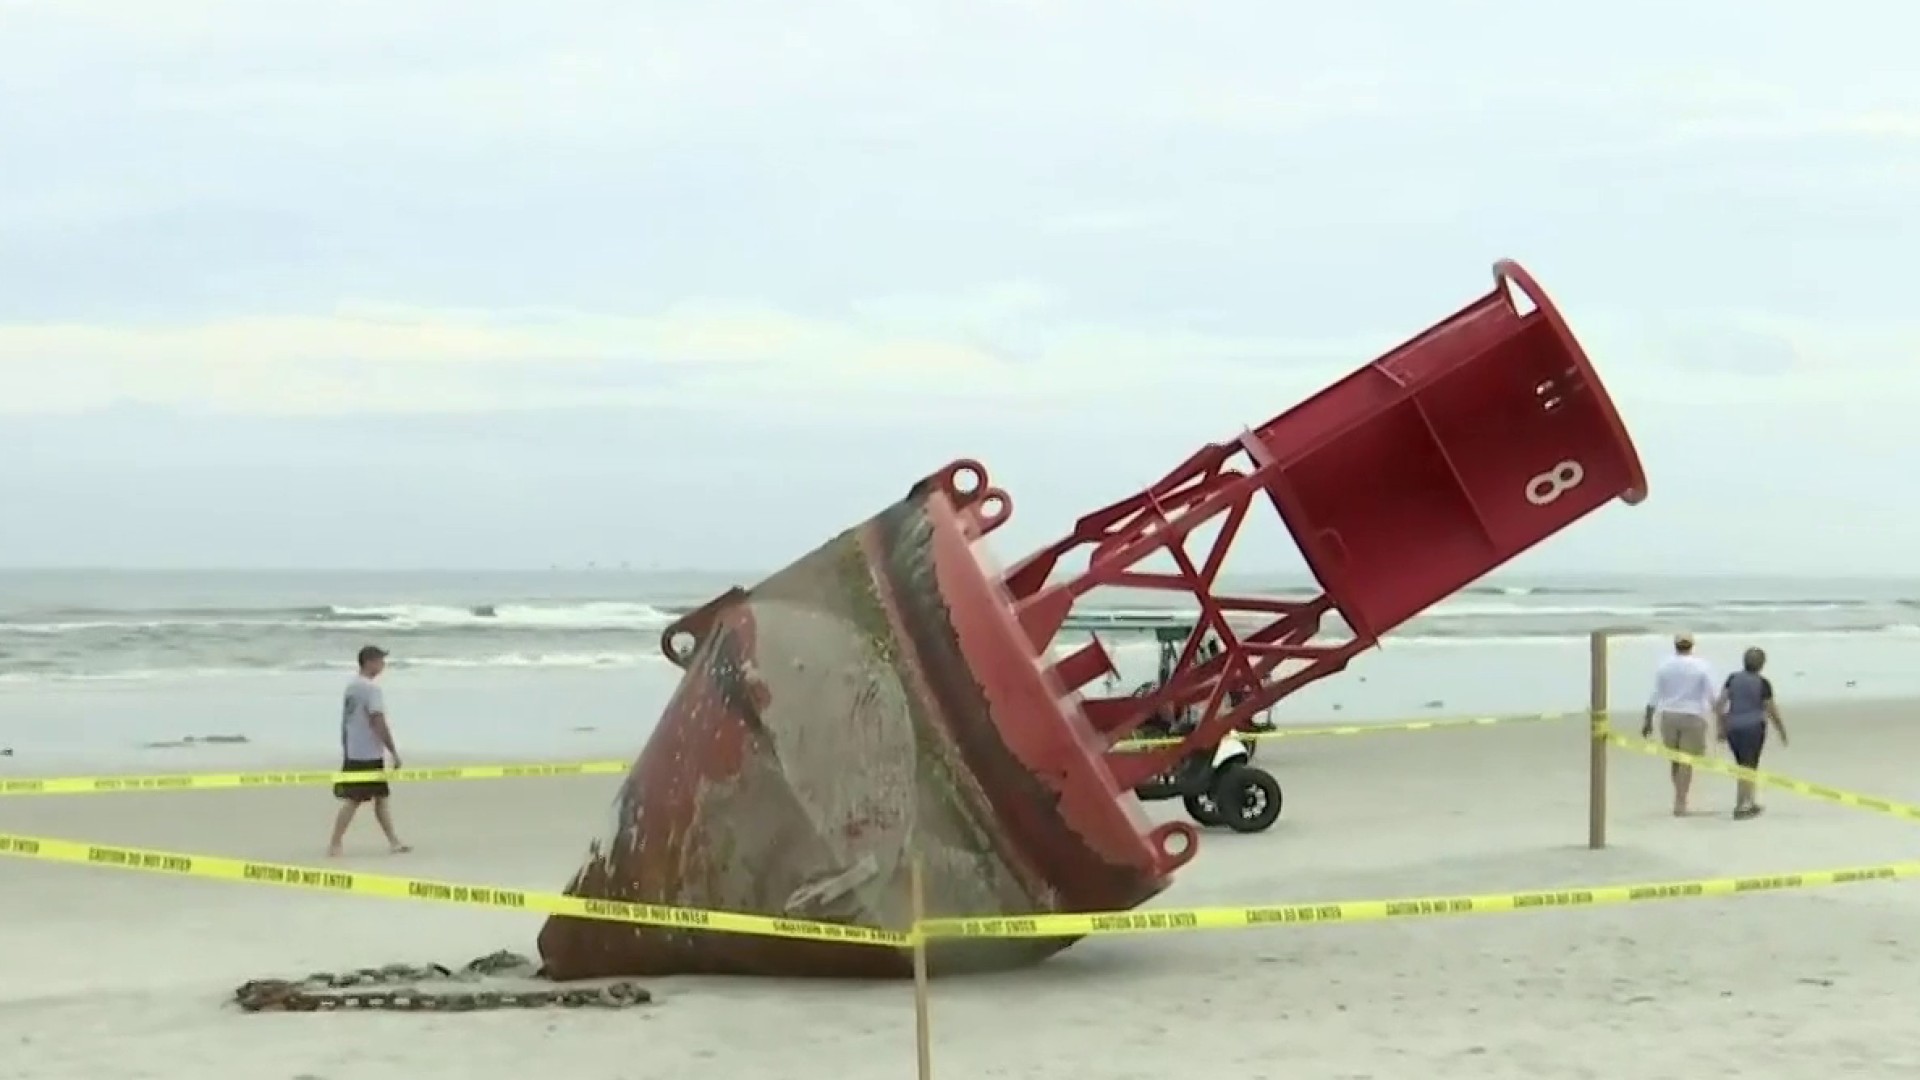 That S One Big Buoy Giant Red Beacon Draws Crowds To New Smyrna Beach